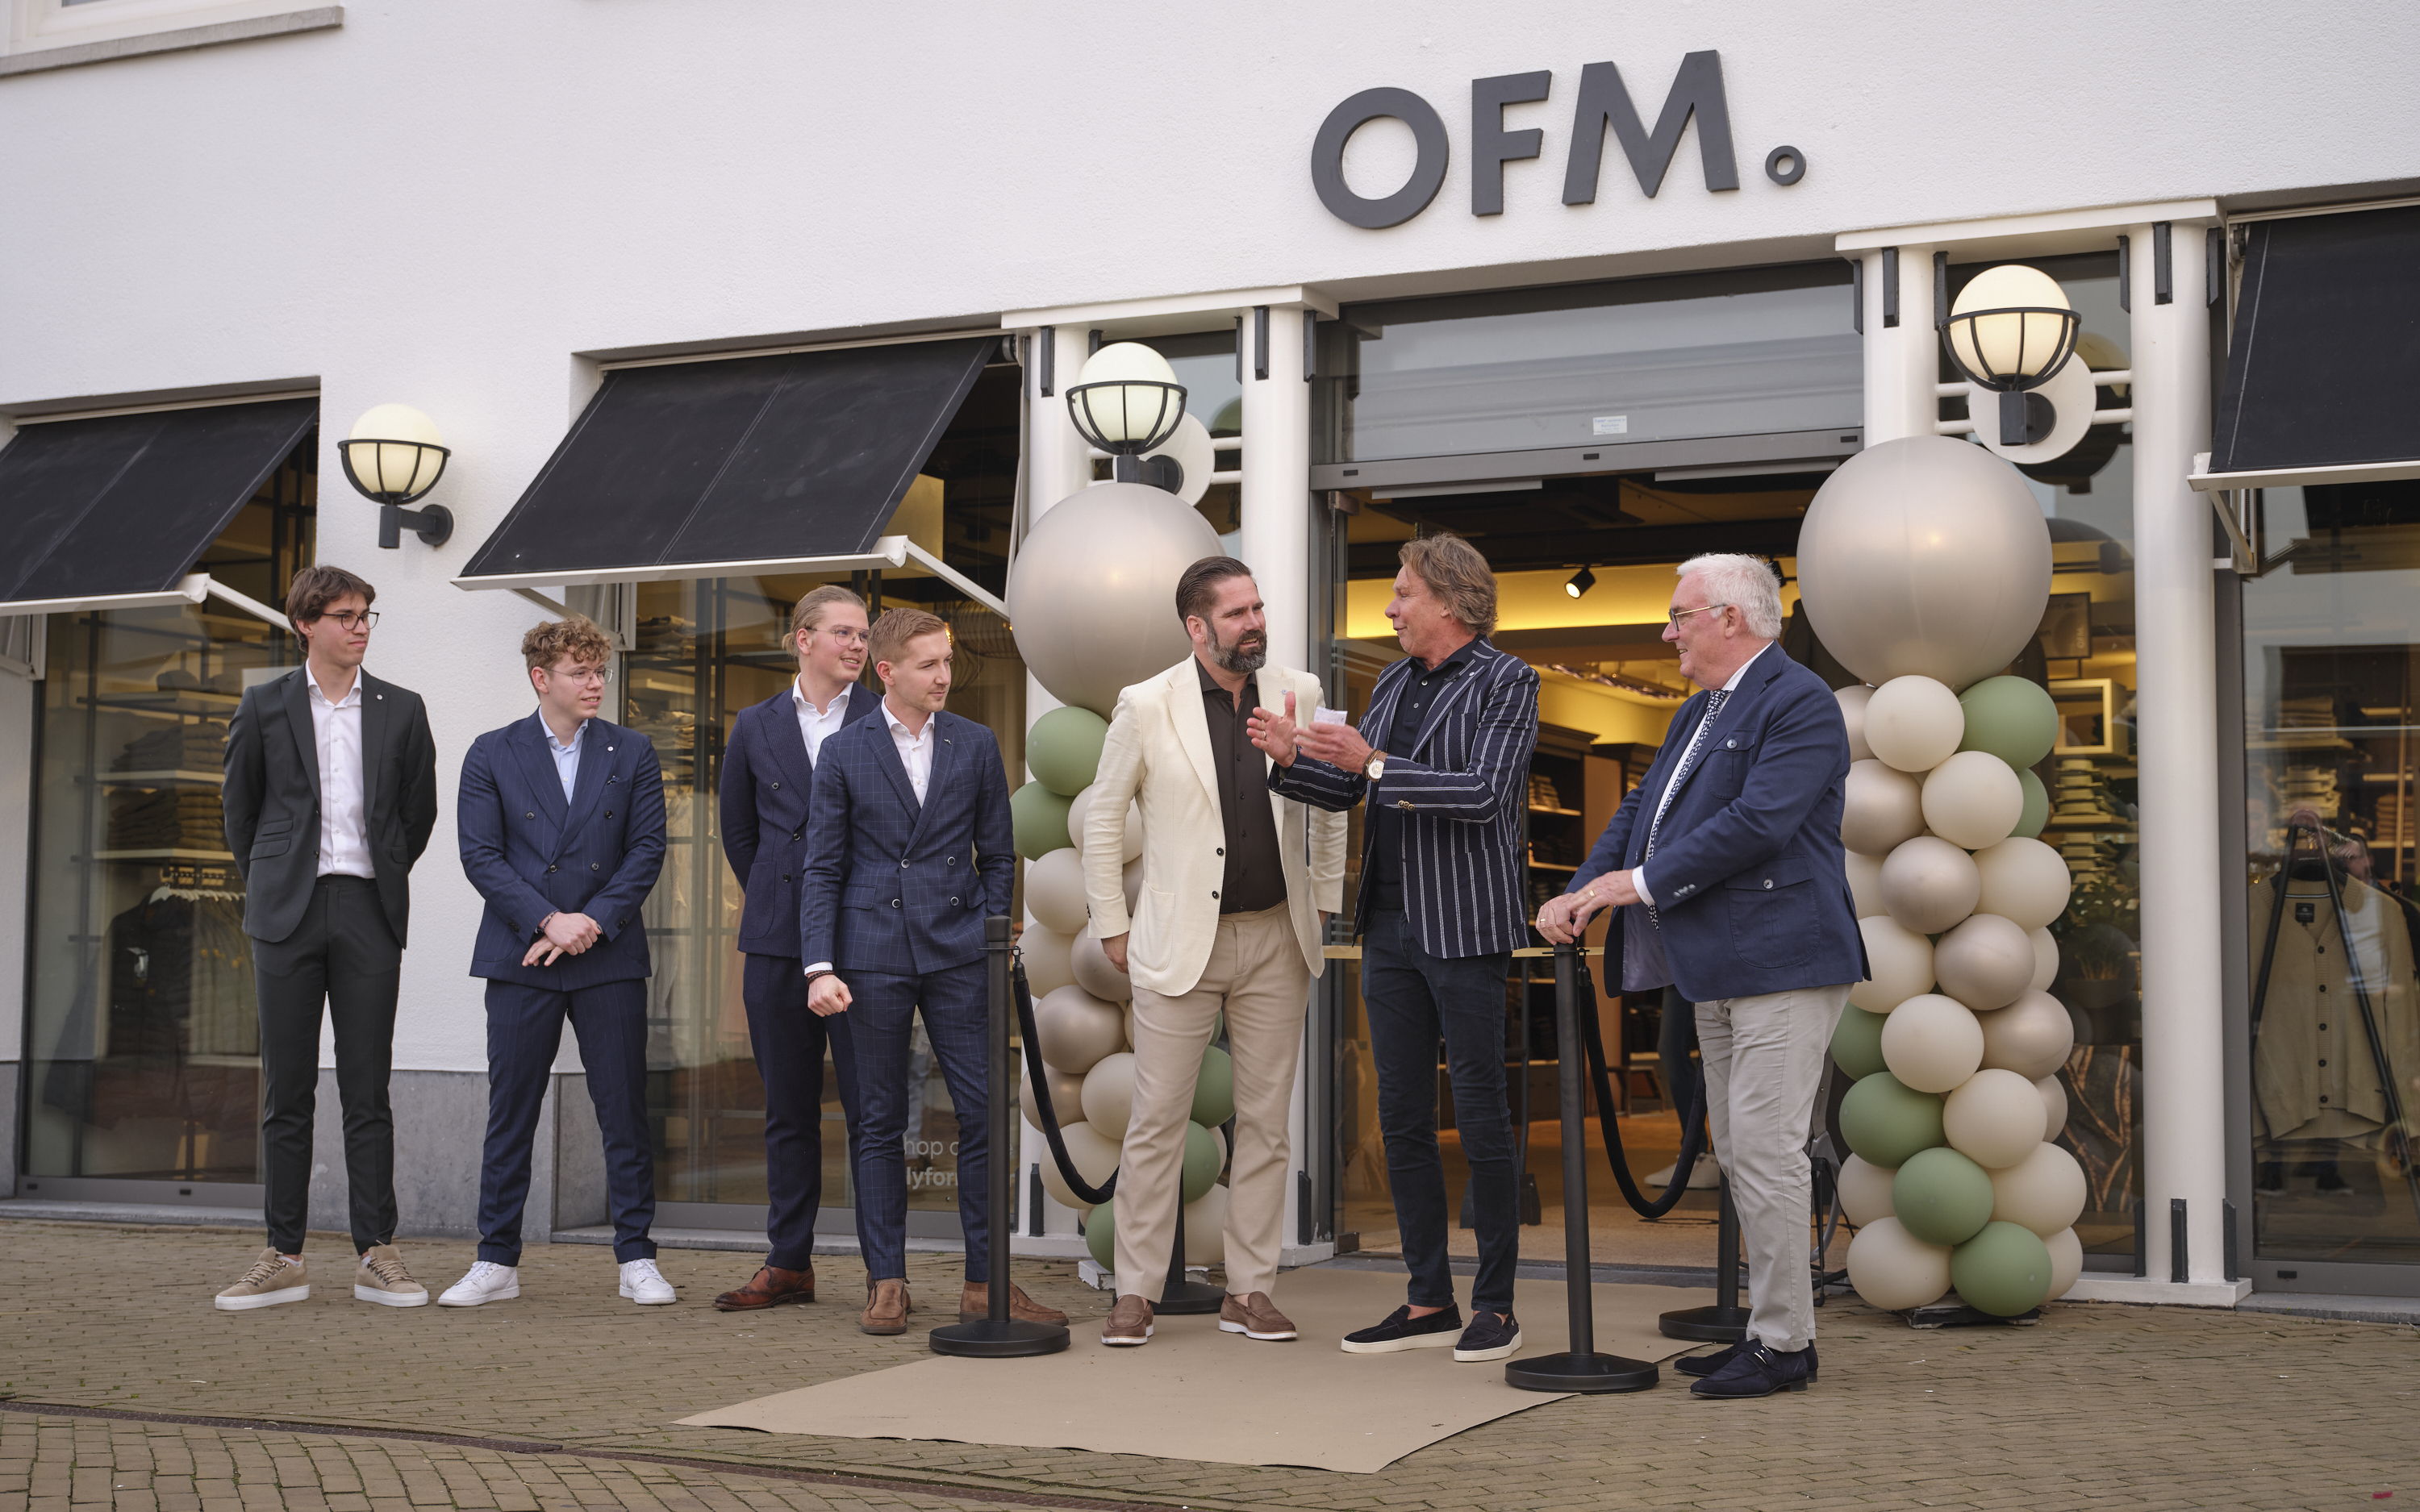 Merkambassadeur Hans Kraay Jr. opent het OFM. pand met oprichter Piet Feenstra, eigenaar Arthur Feenstra en team Sliedrecht.